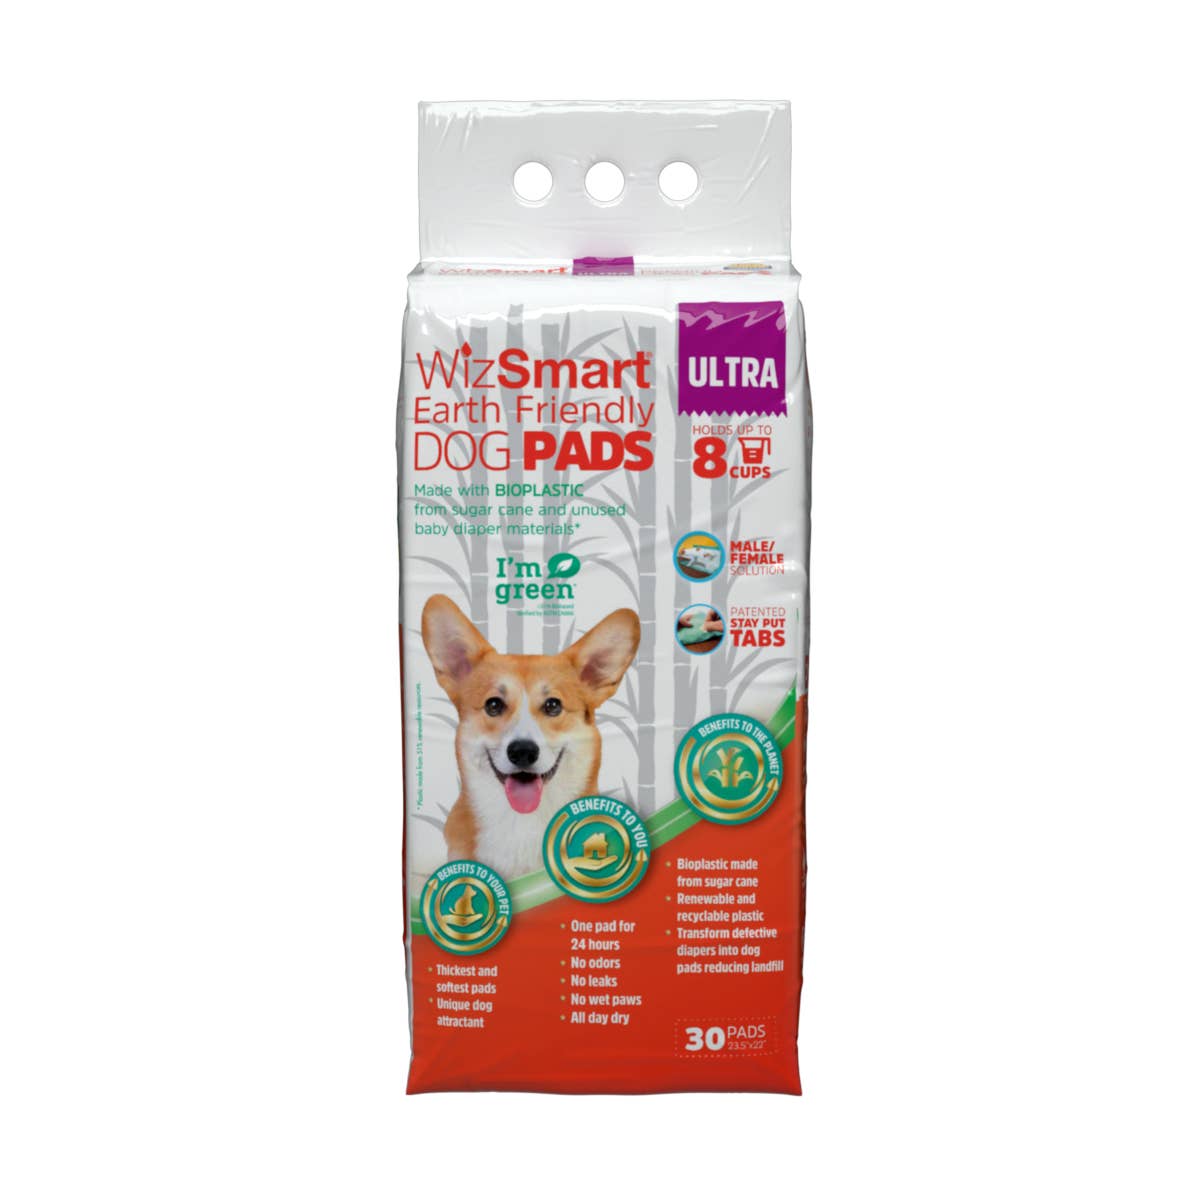 Earth Friendly Dog Pad - Ultra 30 Pack